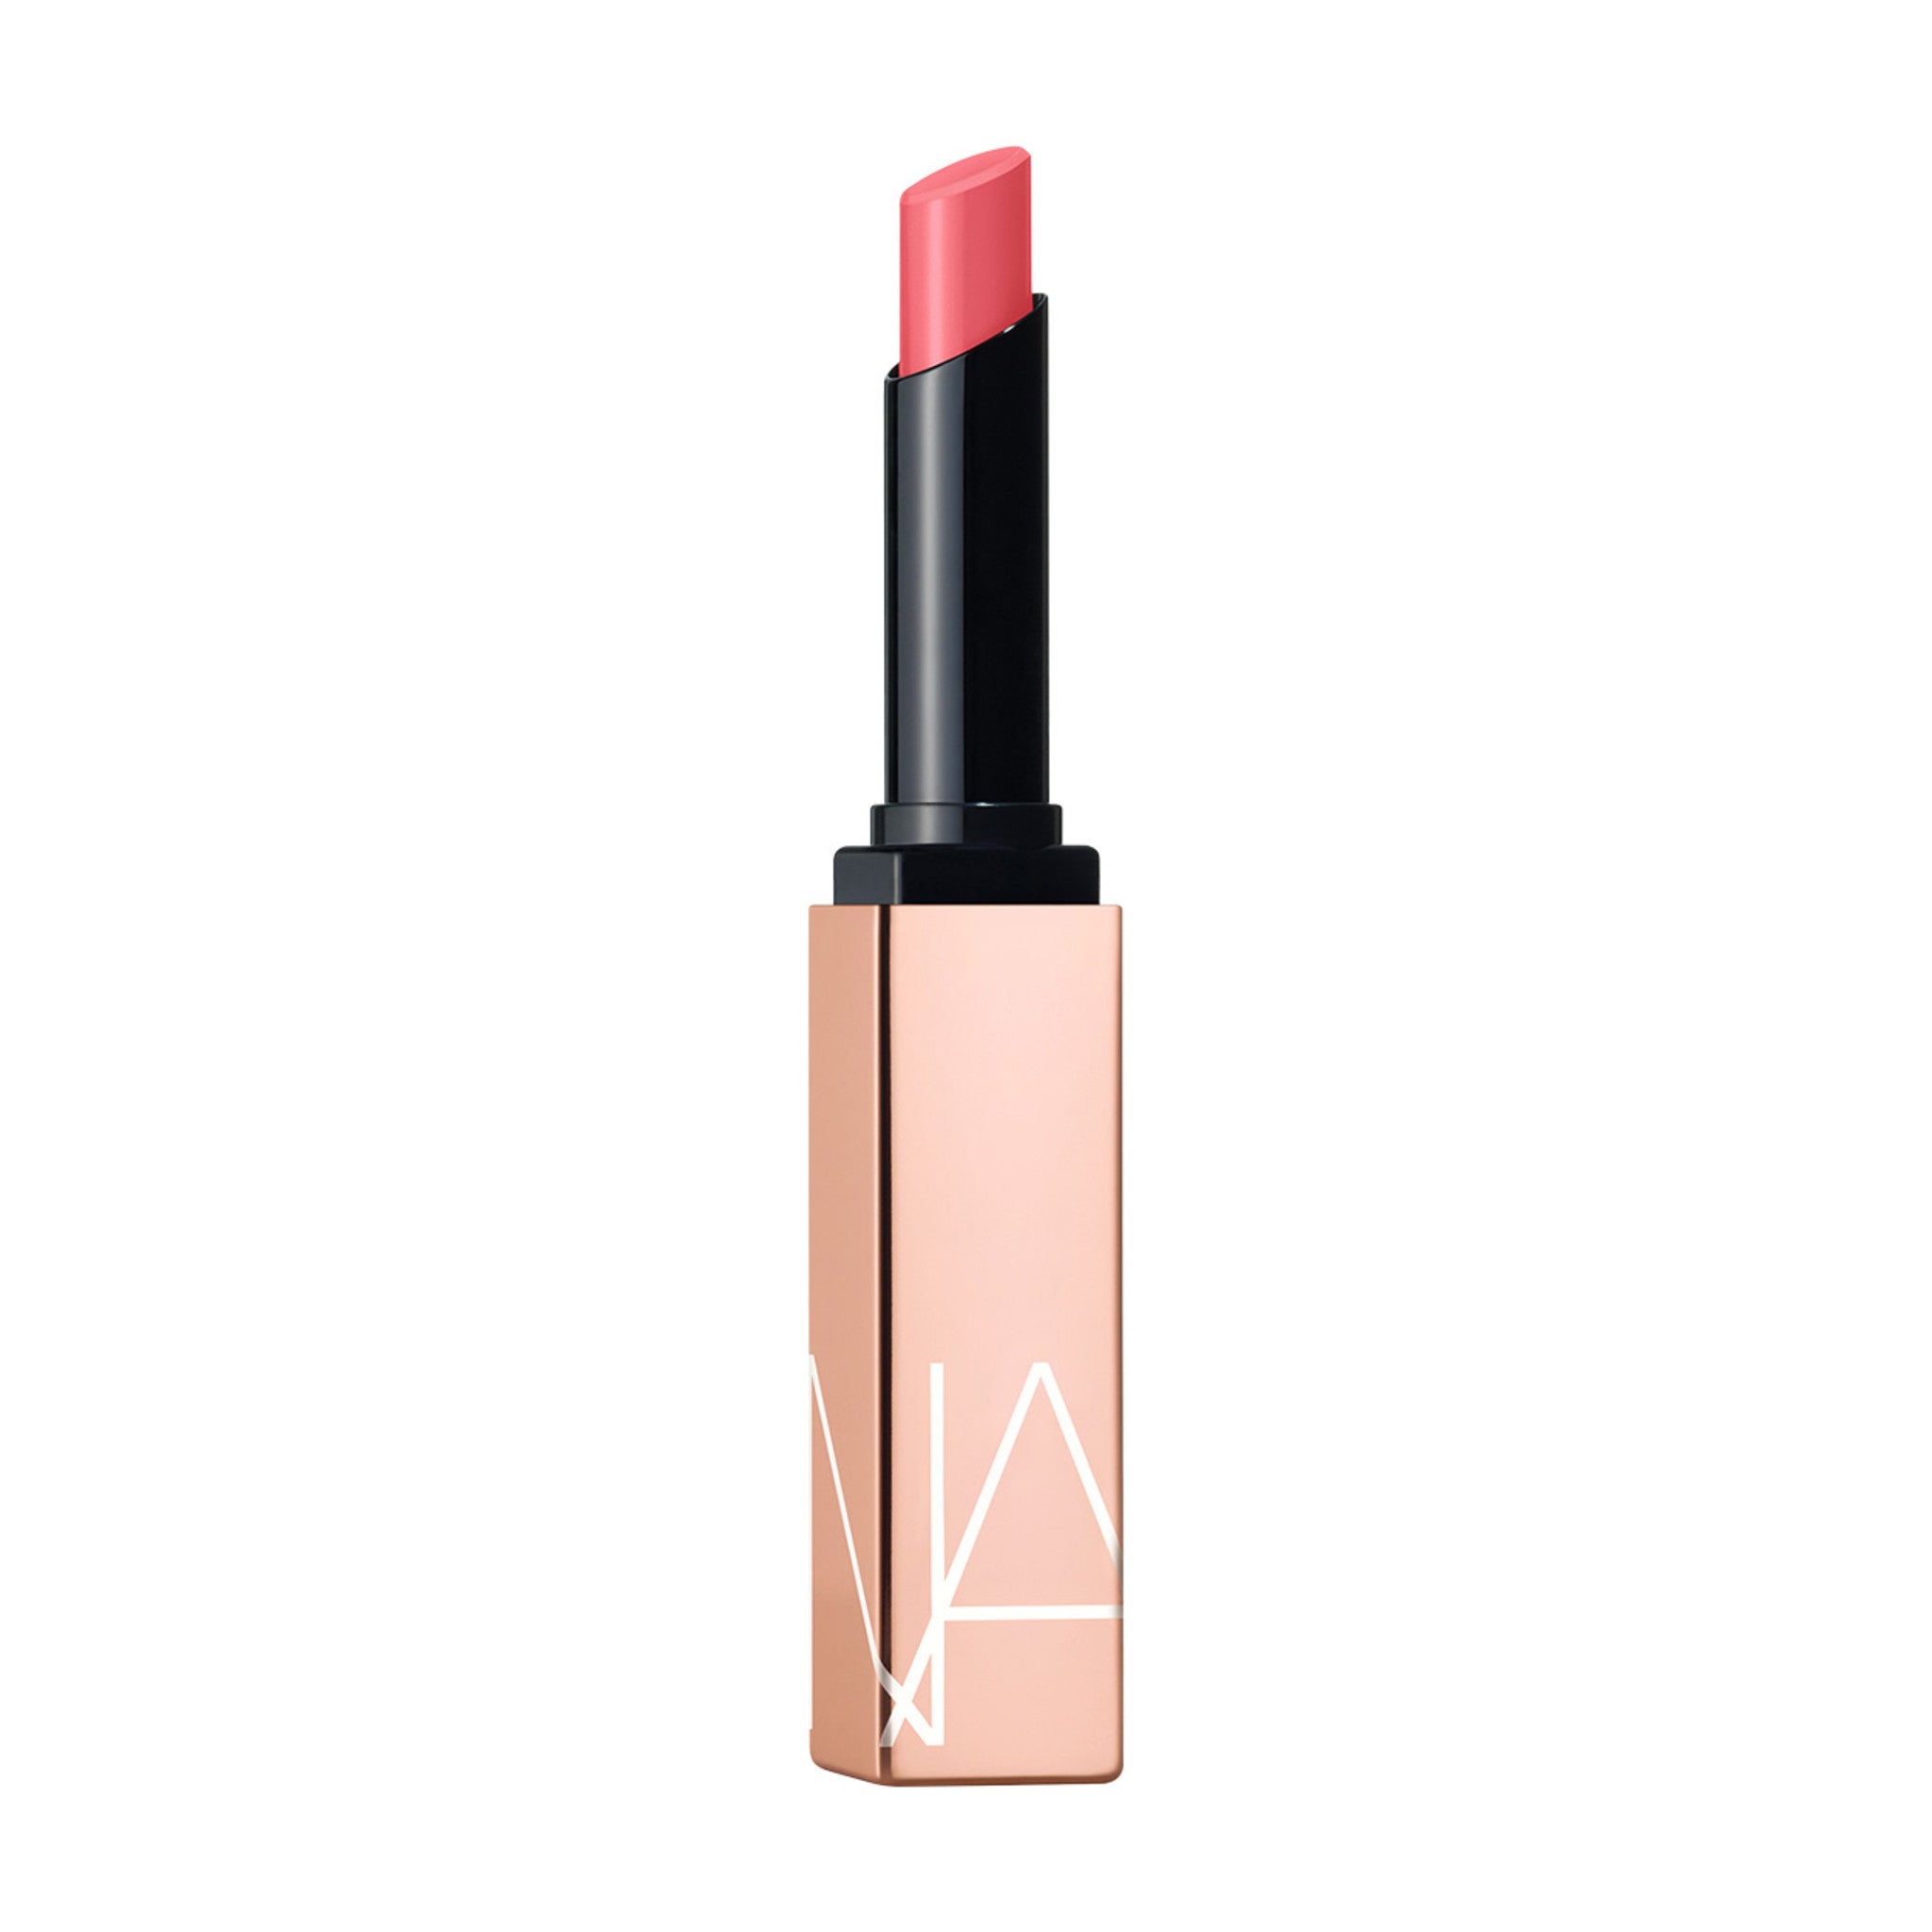 Nars Afterglow Sensual Shine Lipstick Color/Shade variant: On Edge main image.